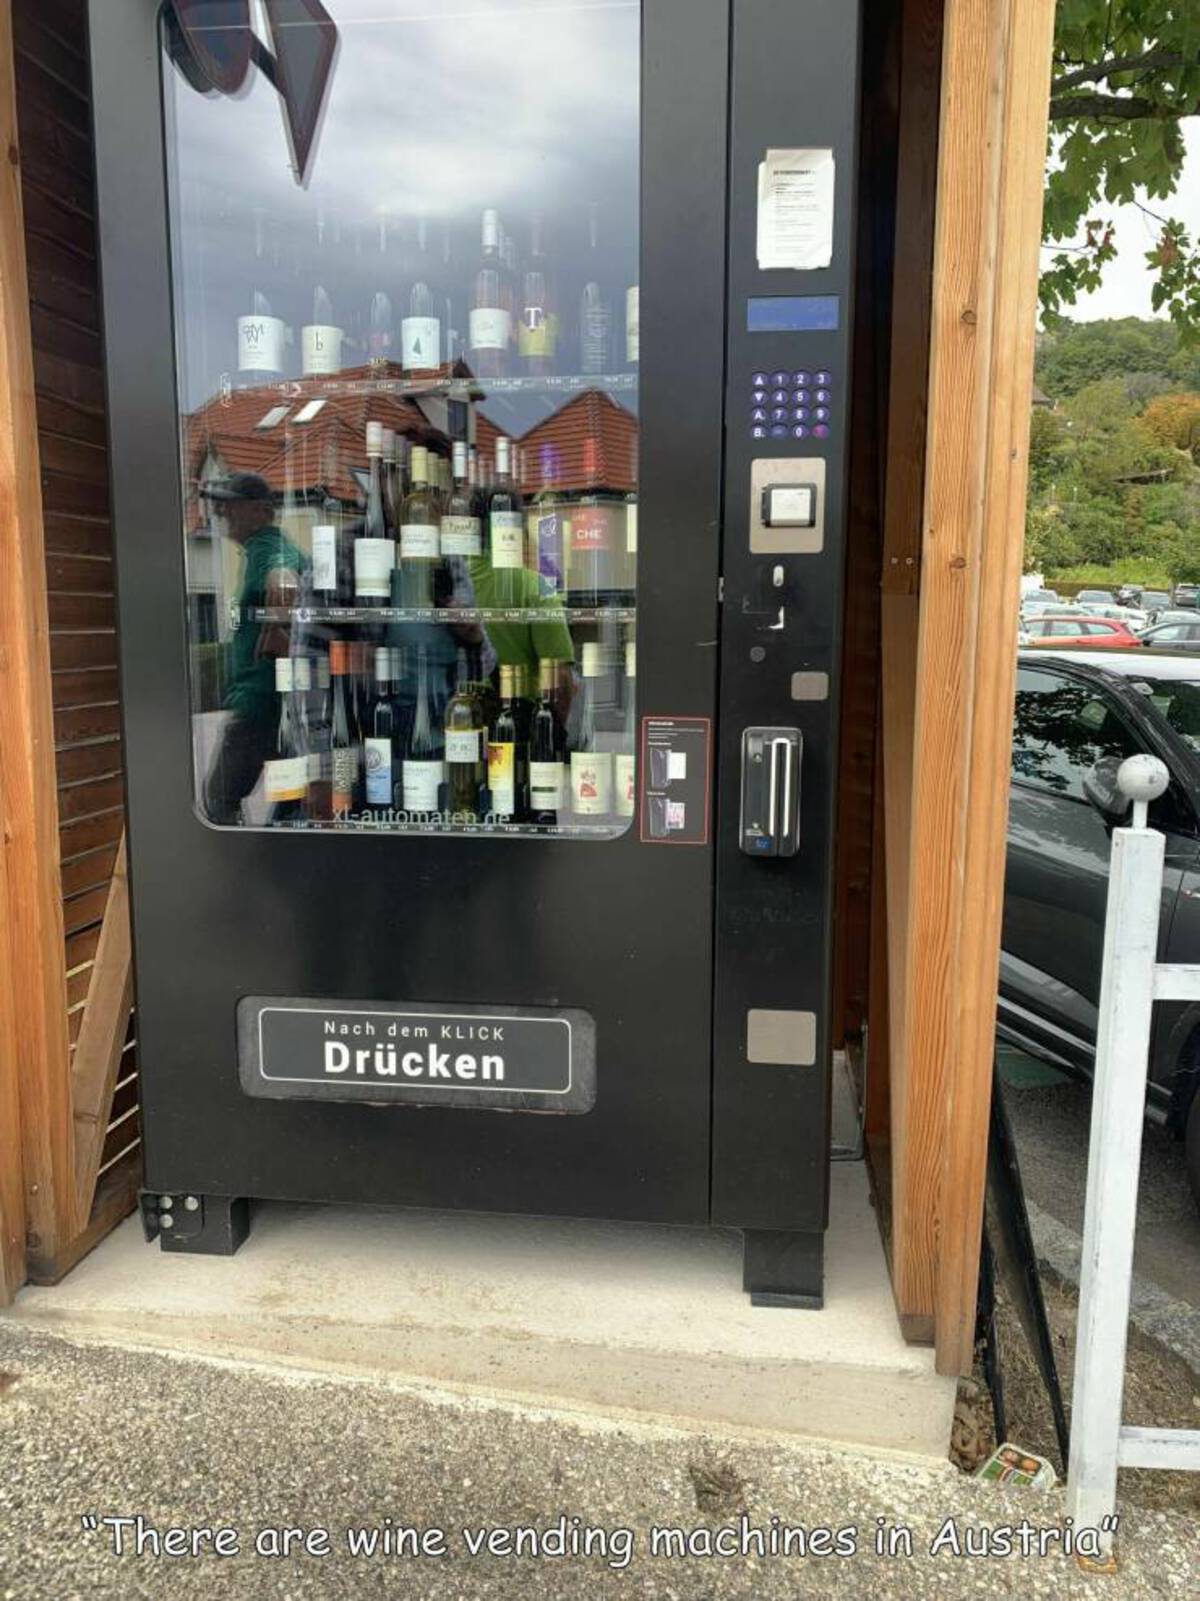 vending machine - 1511R The Uur Xiautomaten de Nach dem Klick Drcken Che 667 "There are wine vending machines in Austria"